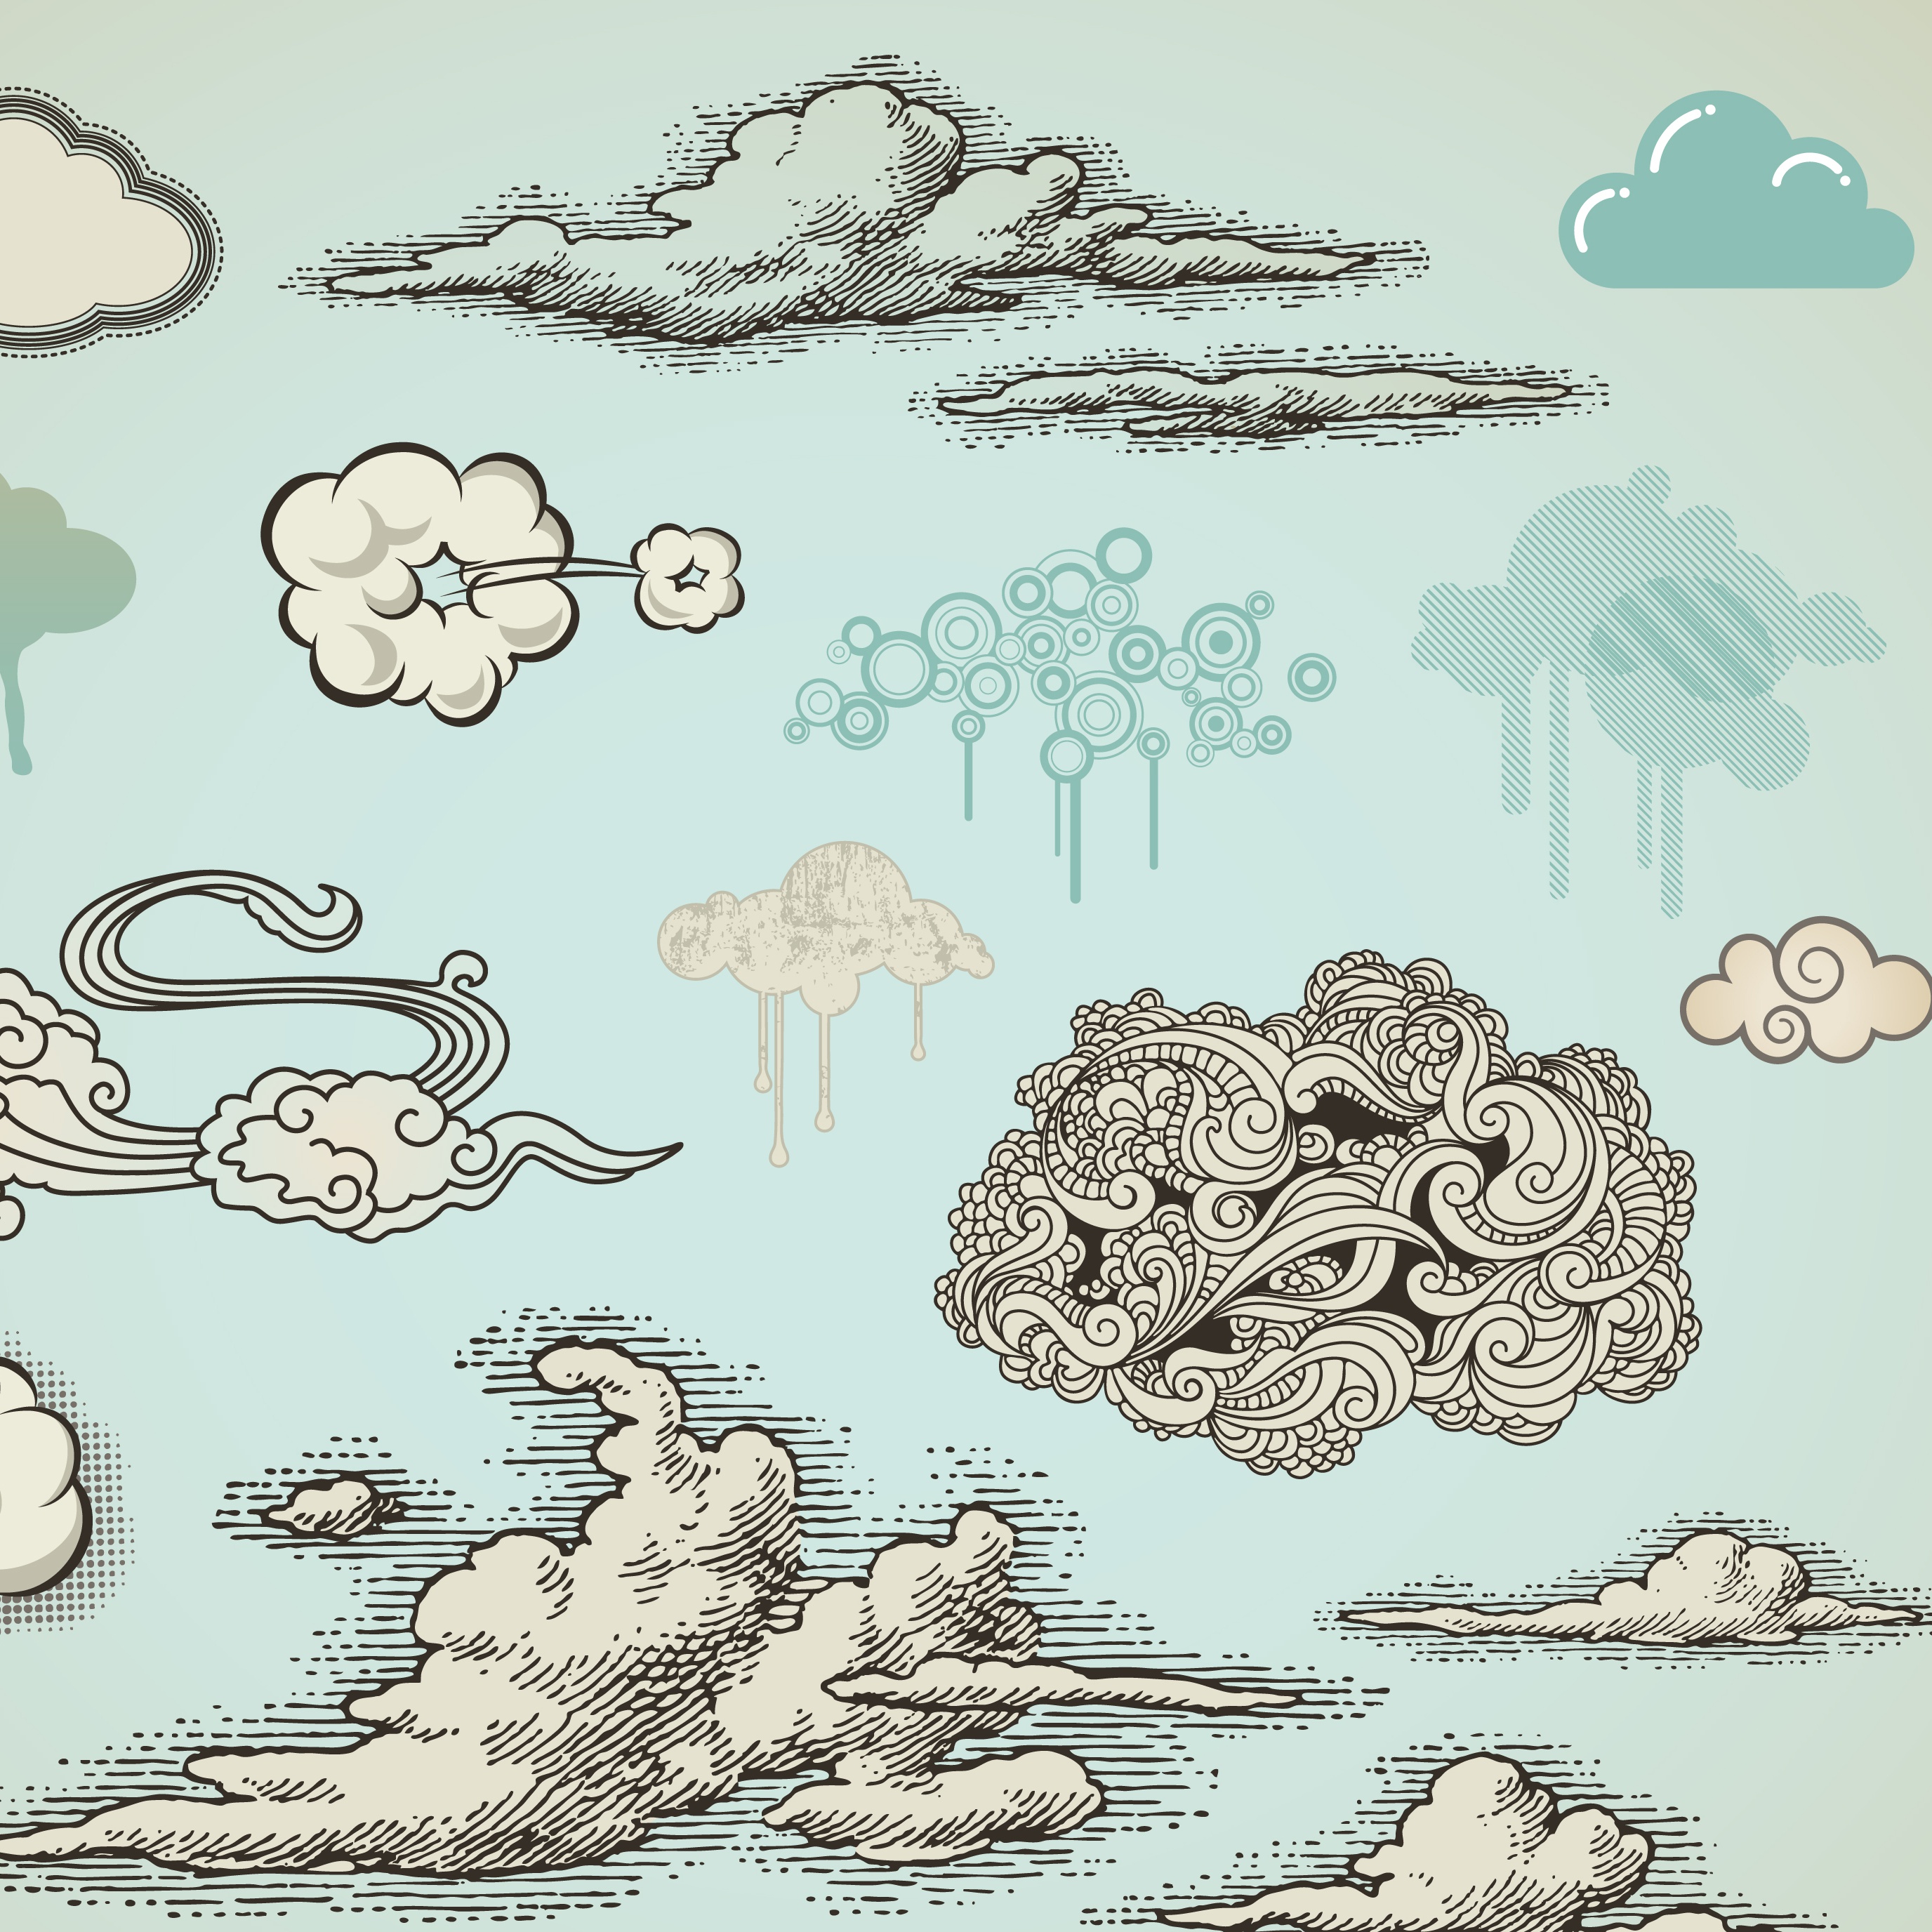 Cloud graphics